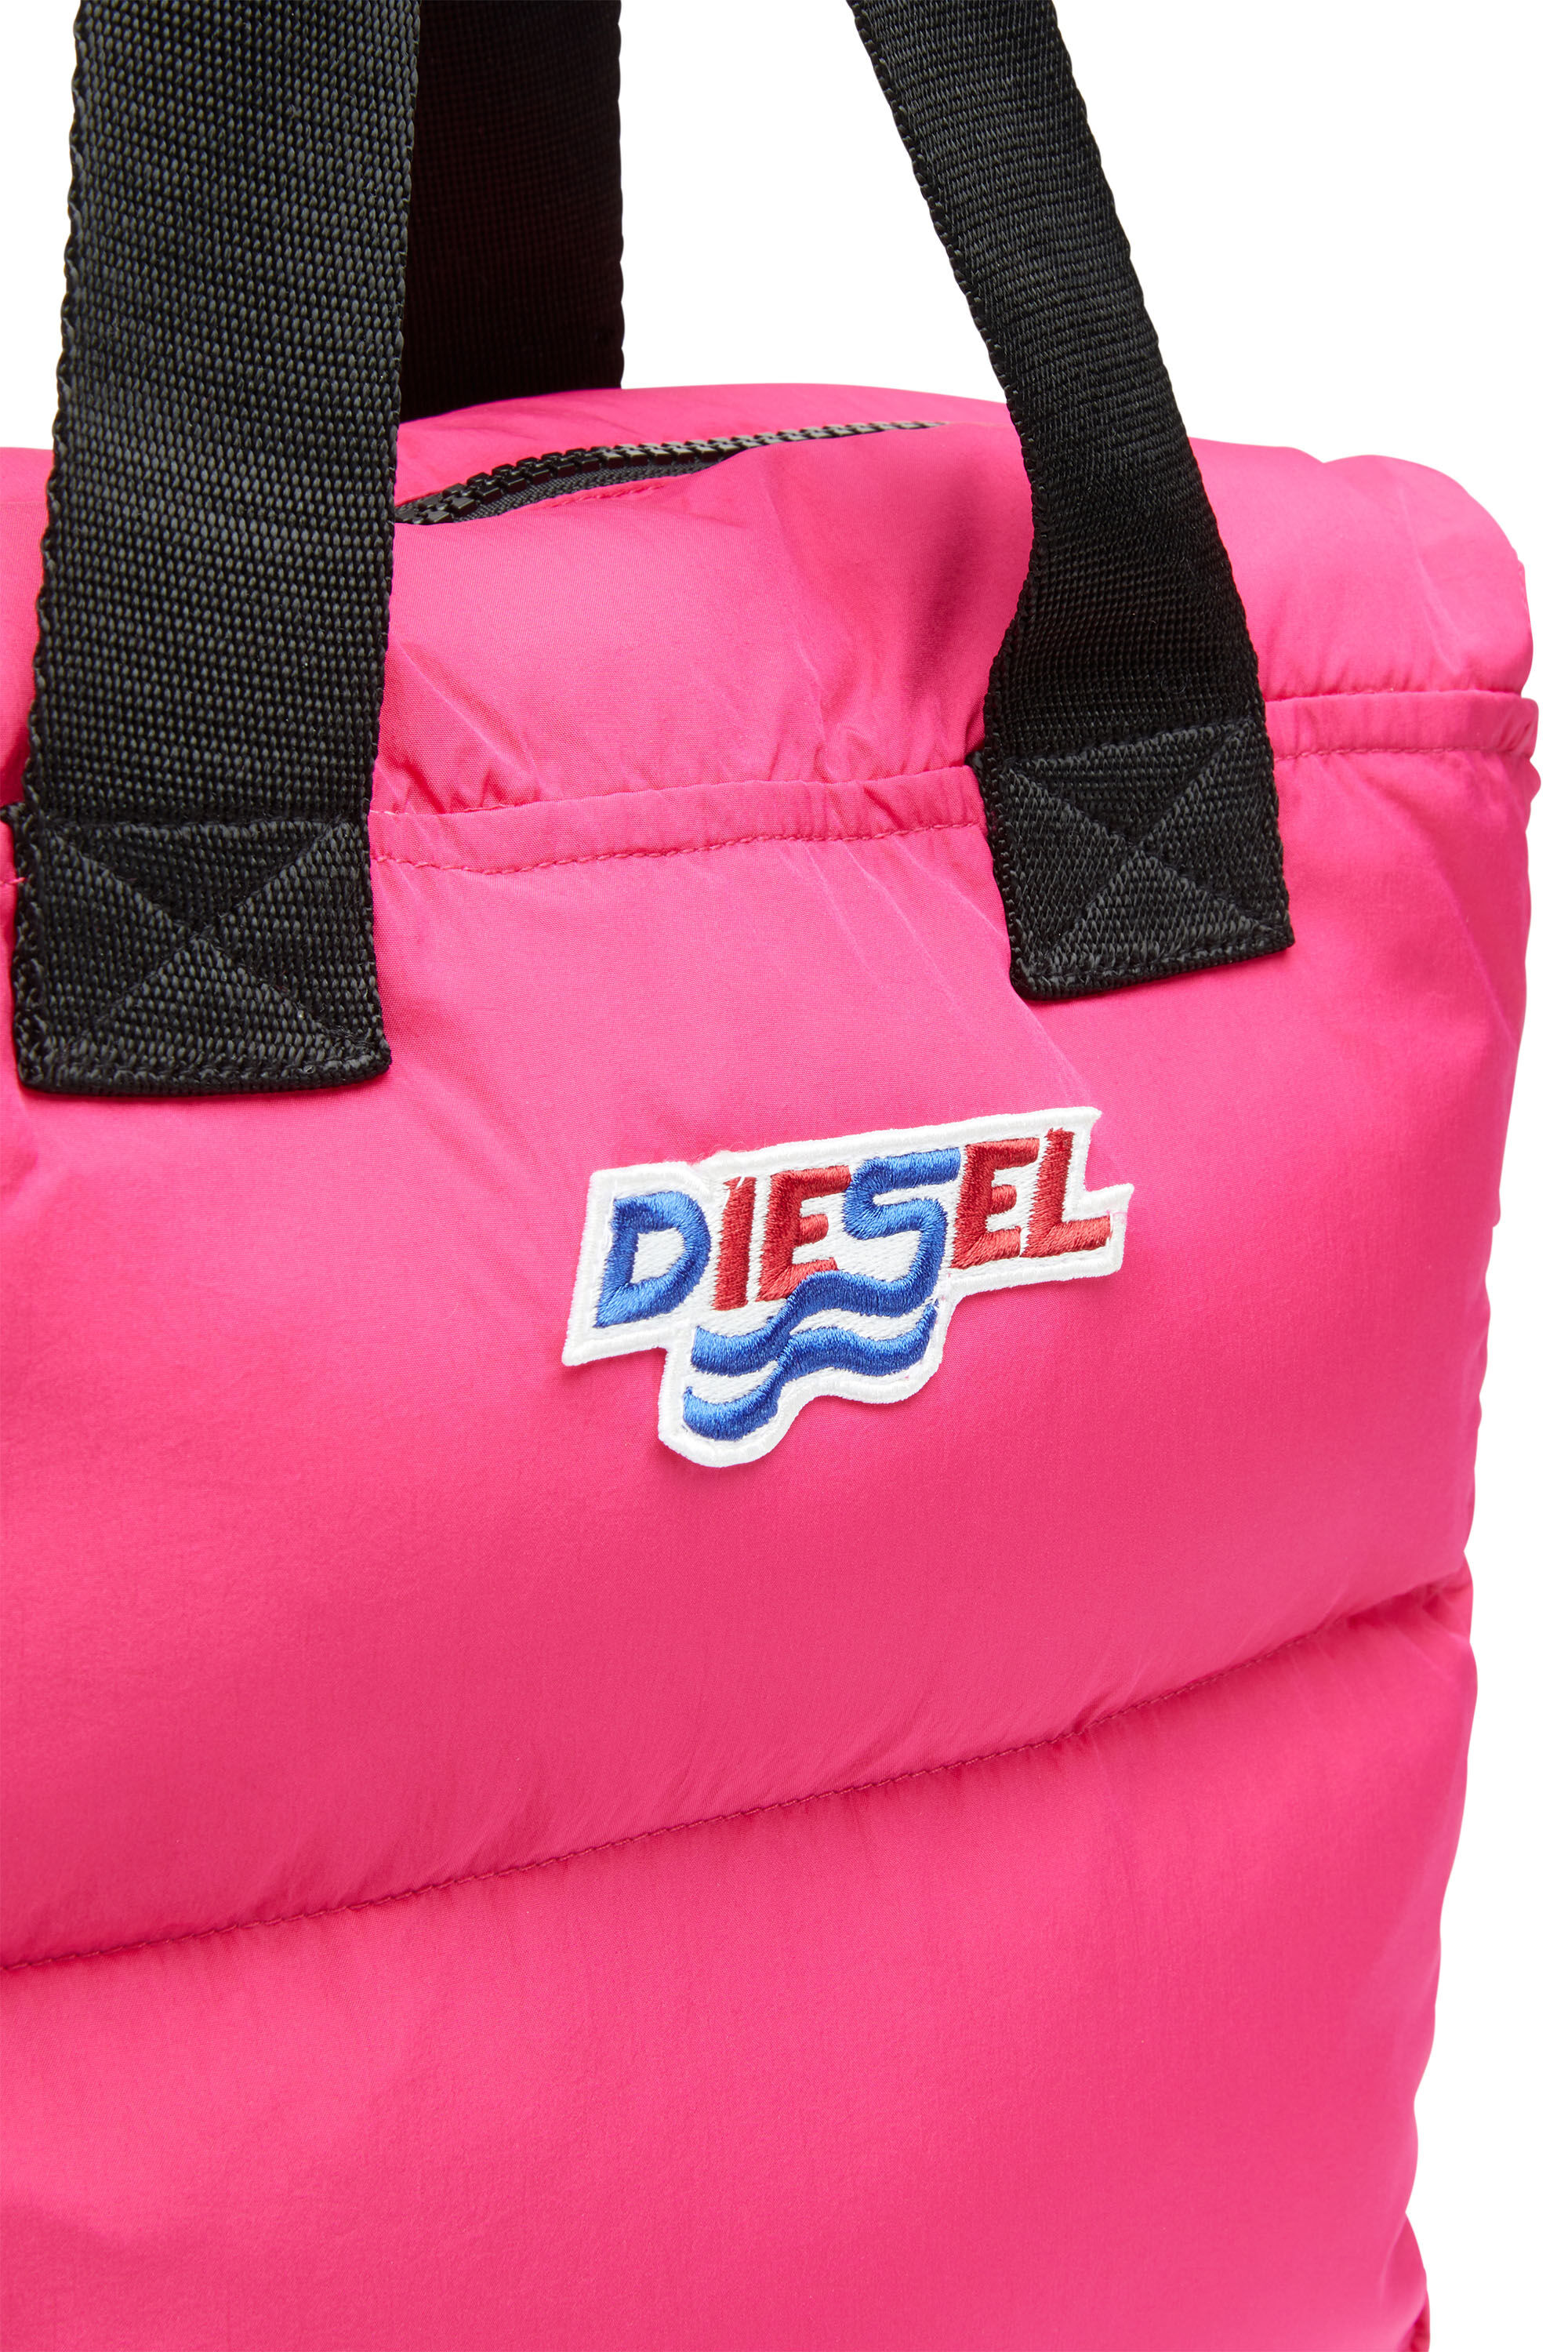 Diesel - WIRO, Pink - Image 5